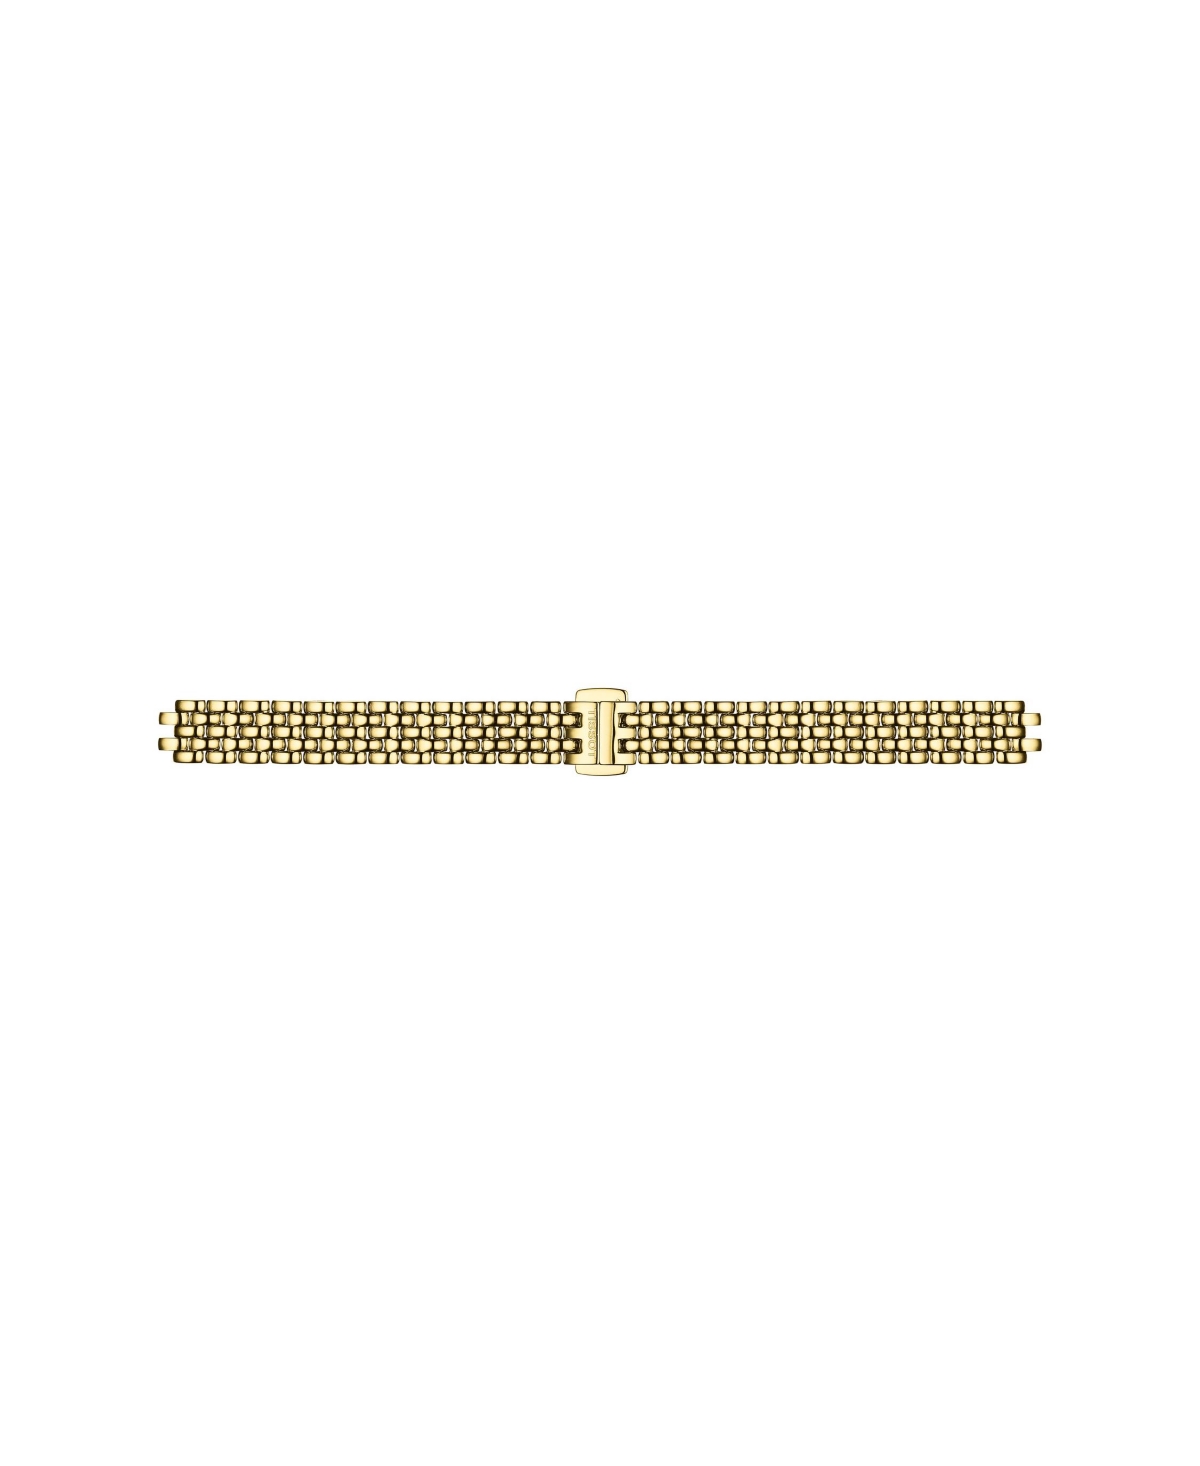 Shop Tissot Women's Swiss T-lady Lovely Gold-tone Pvd Stainless Steel Bracelet Watch 19.5mm In Yellow Gold N